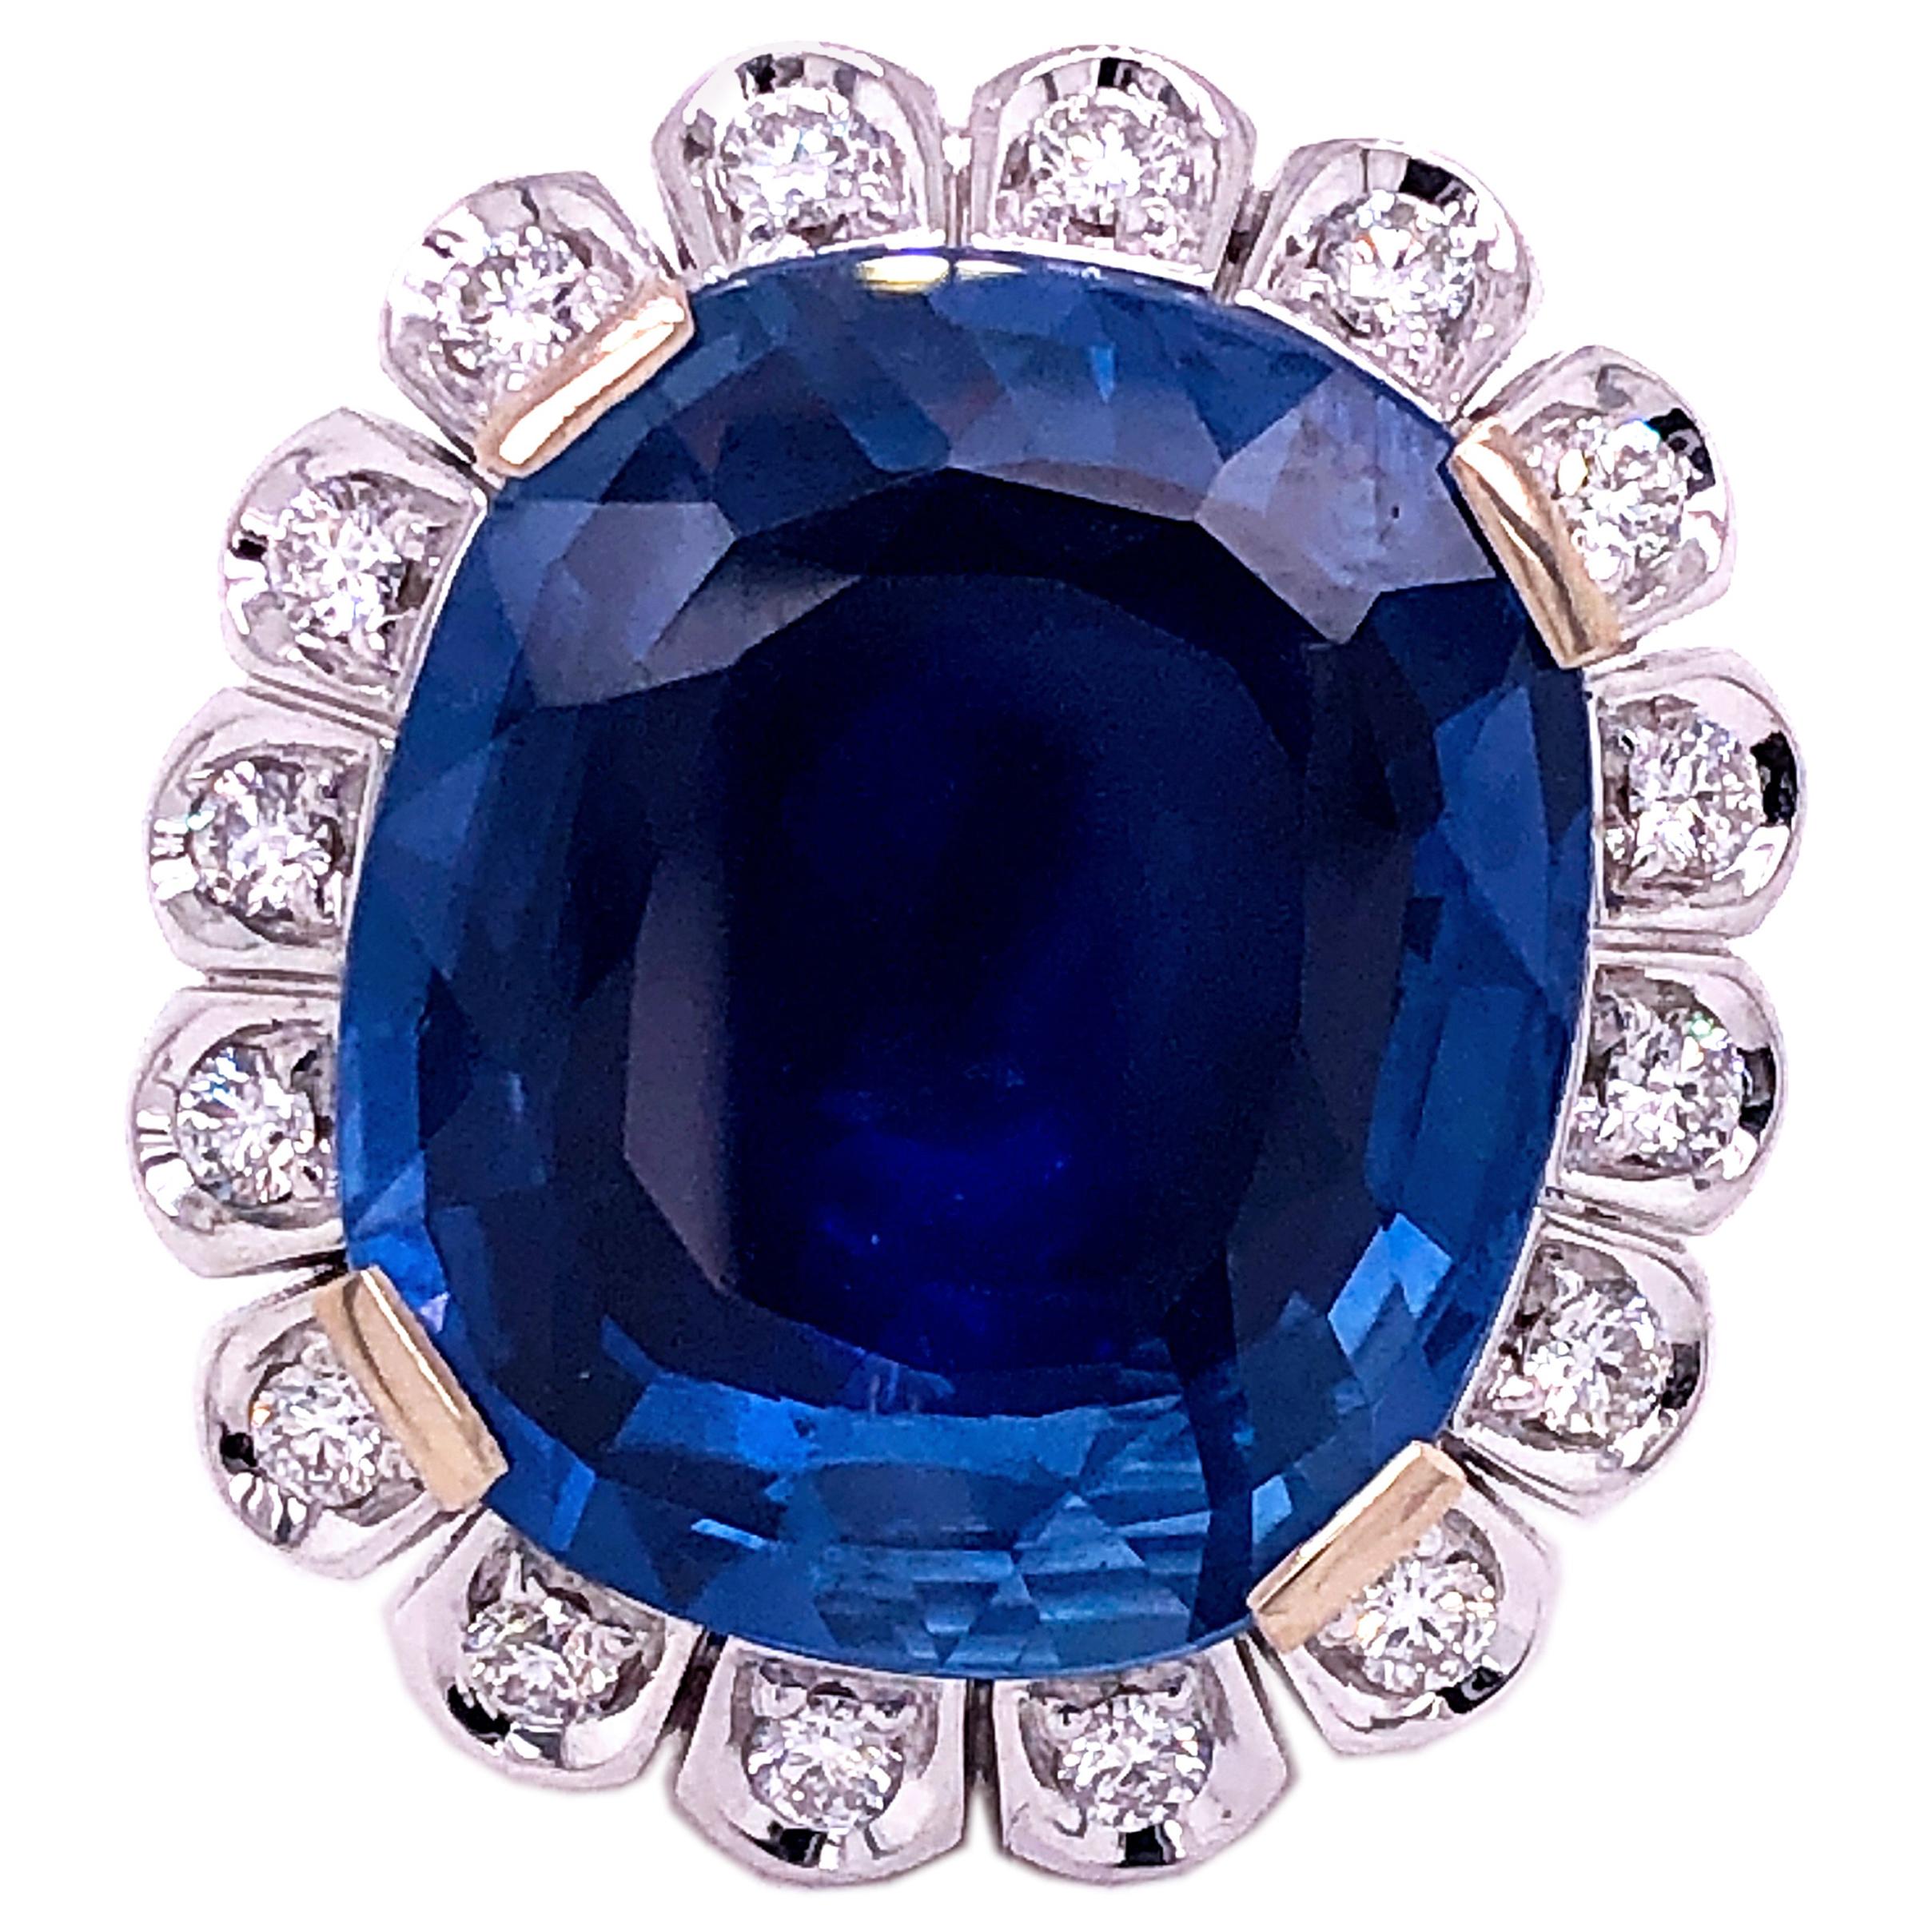 GIA Certified 18.16 Carat No Heat Cushion Cut Ceylon Sapphire Diamond Halo Ring